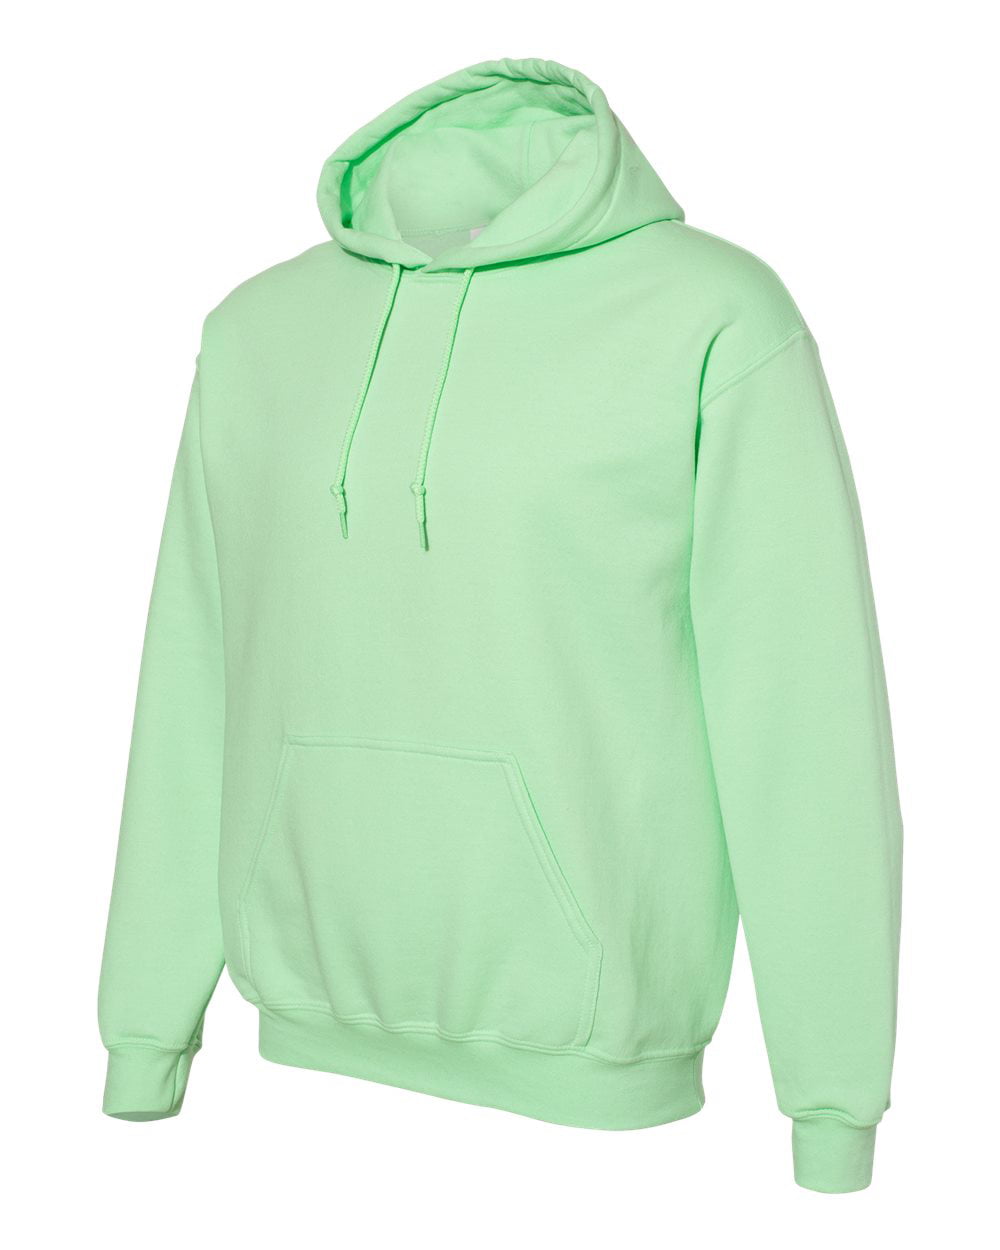 Men Multi Colors Hooded Sweatshirt Men Hoodies Color Mint Green 4X-Large Size